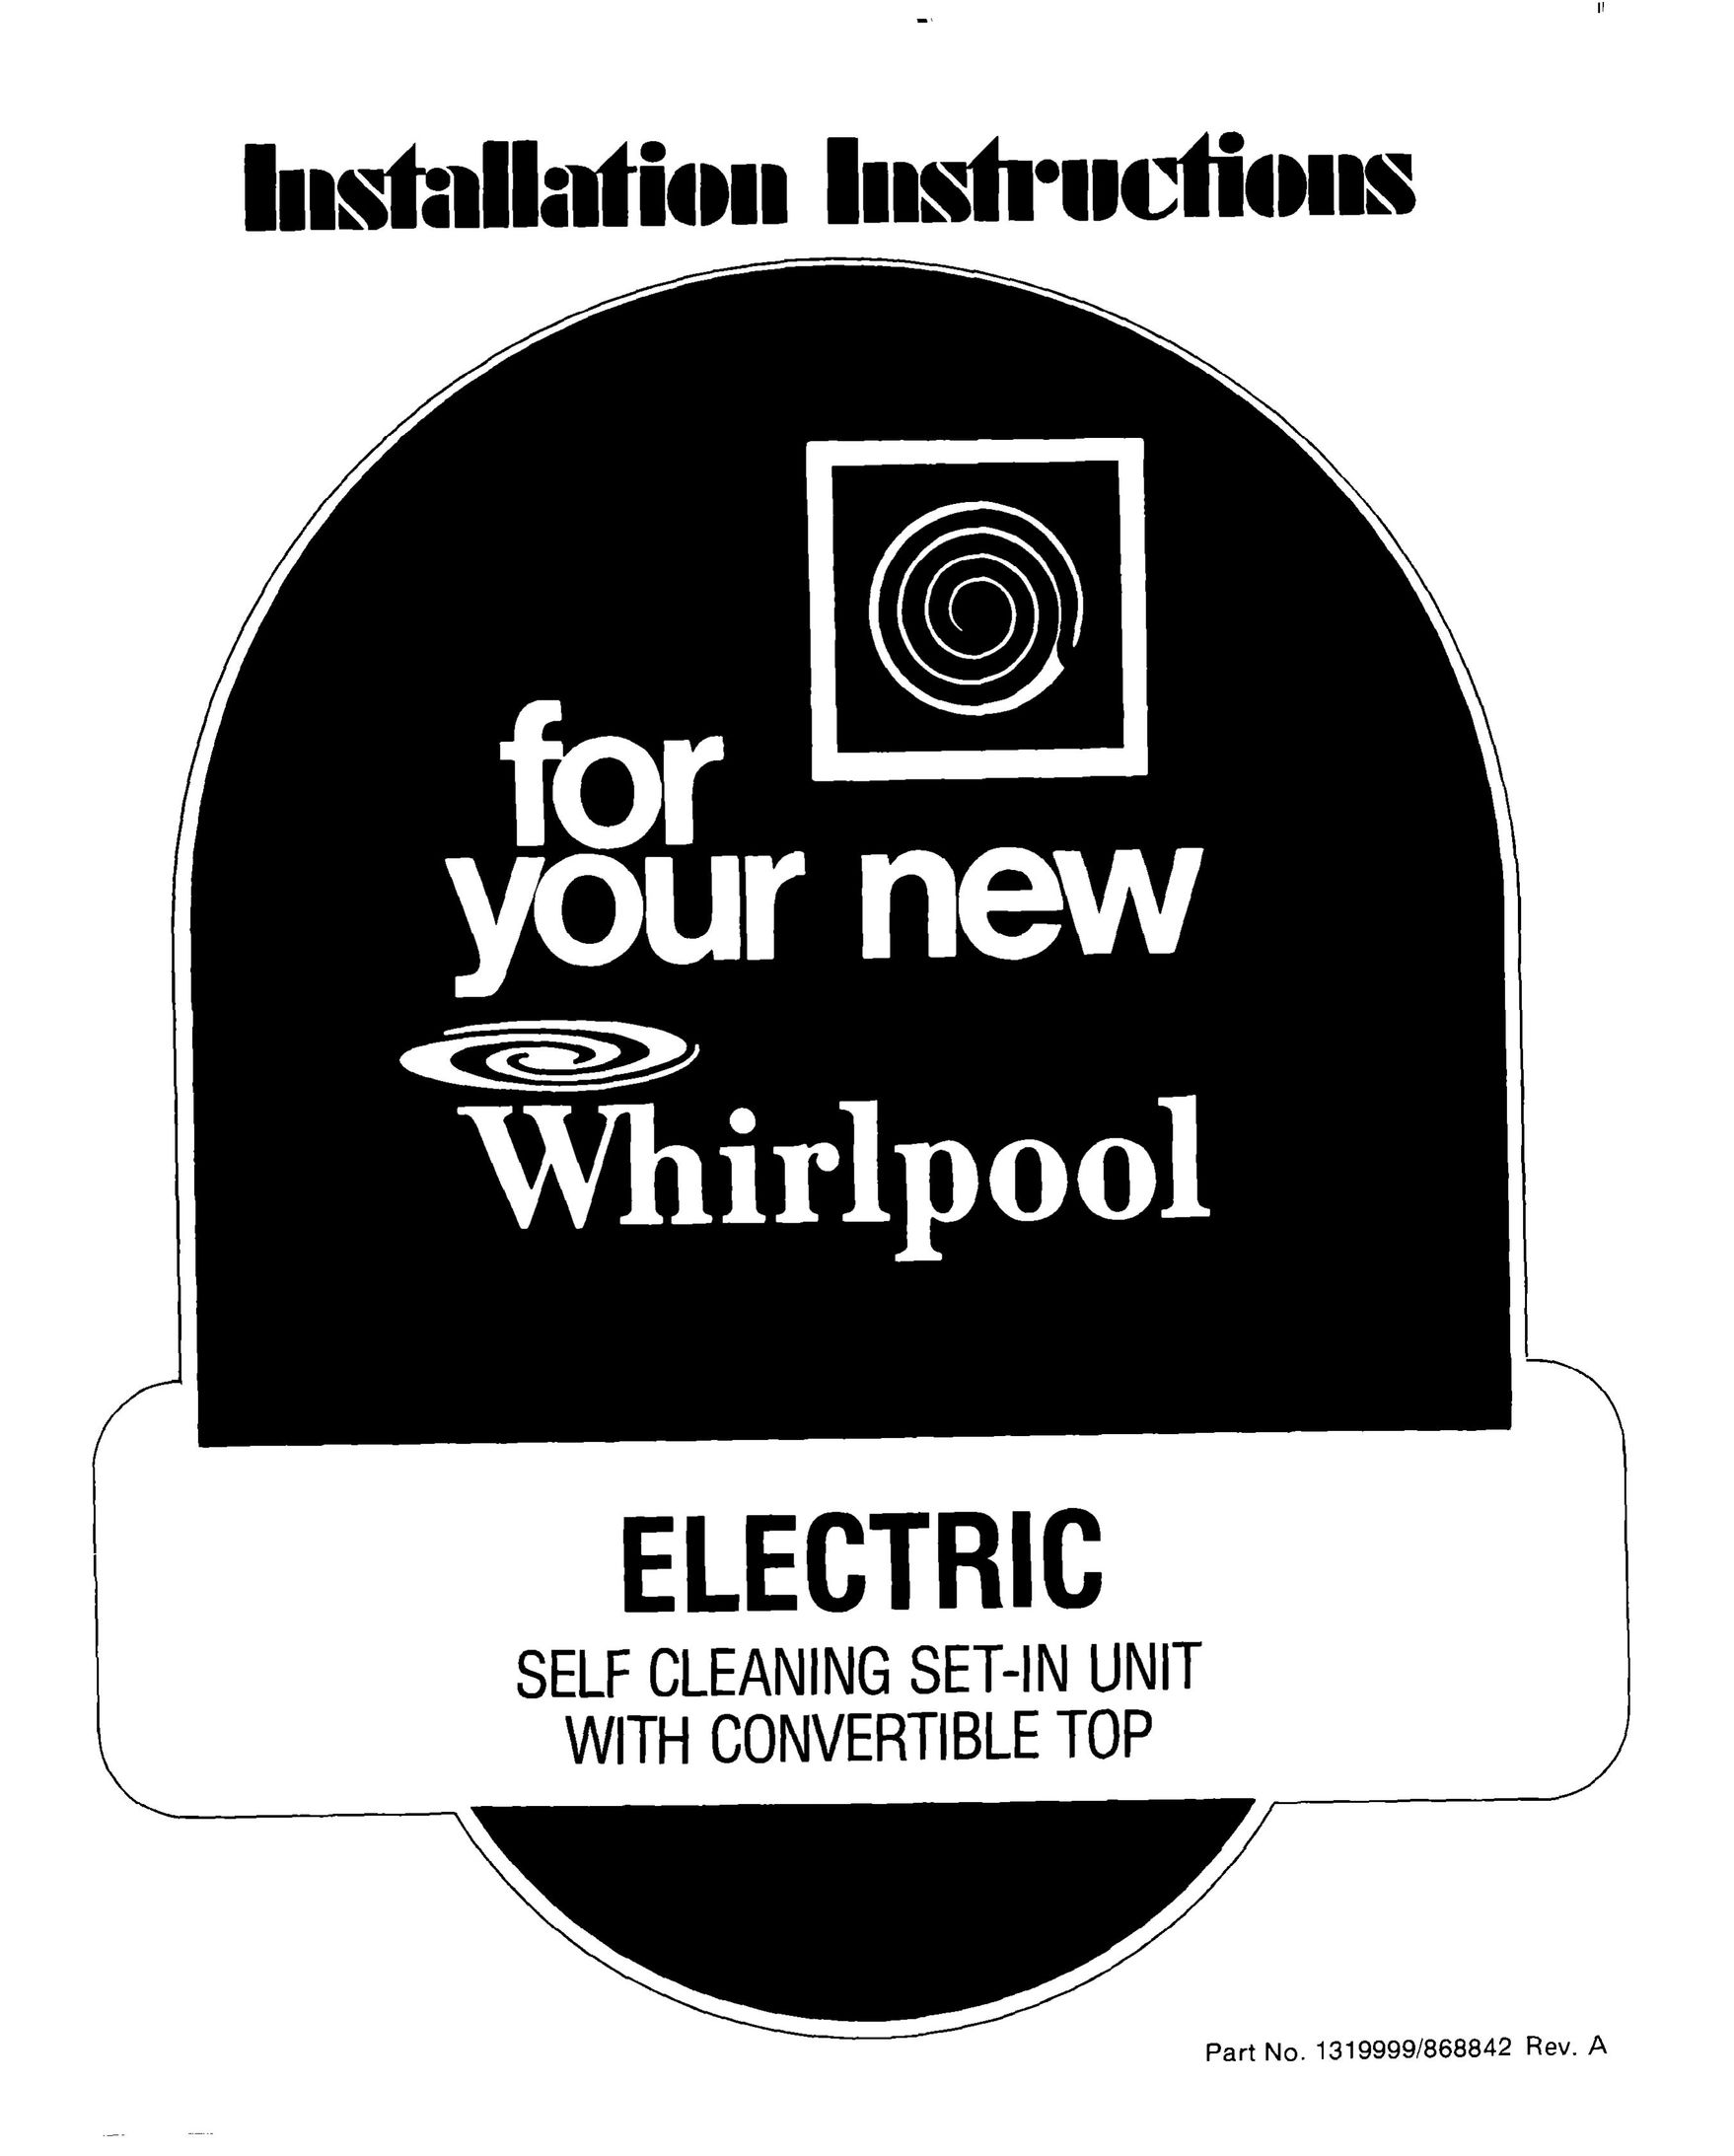 Whirlpool 1.32E+13 Oven User Manual